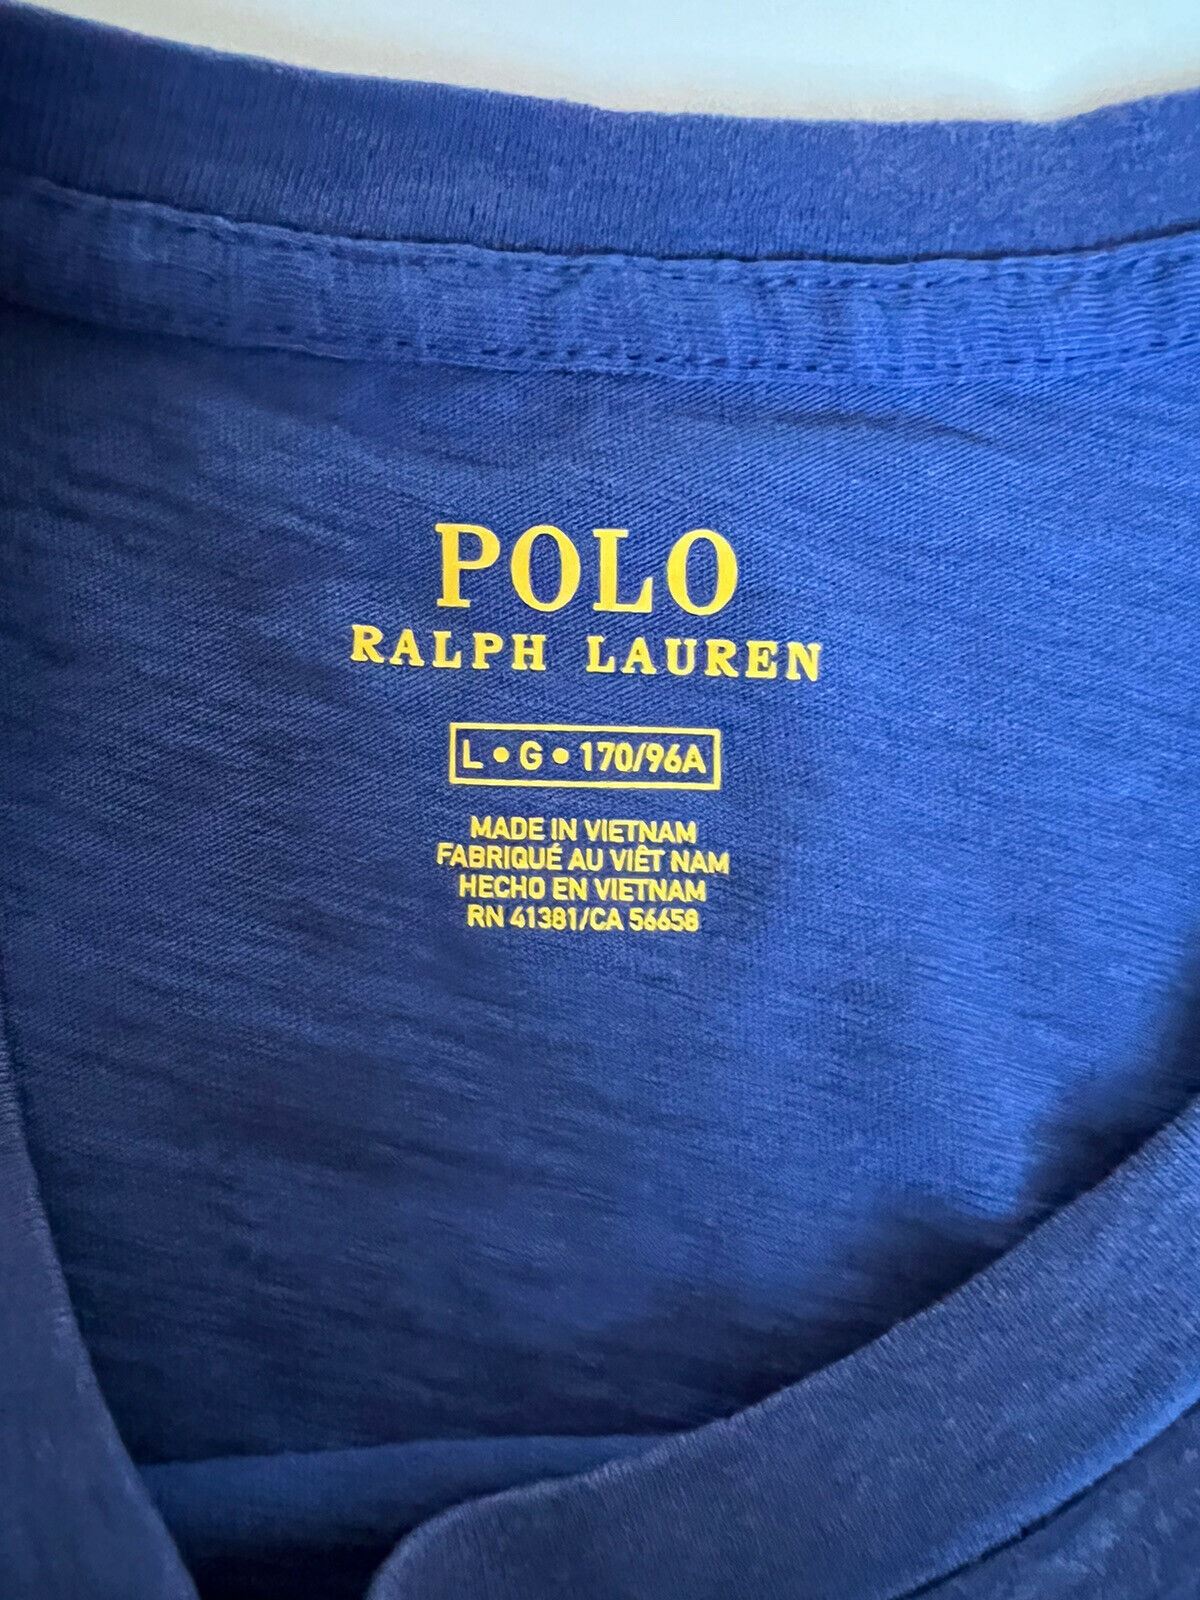 Neu mit Etikett: 98 $ POLO Ralph Lauren Damen-Kurzarm-T-Shirt Royal Navy Large 